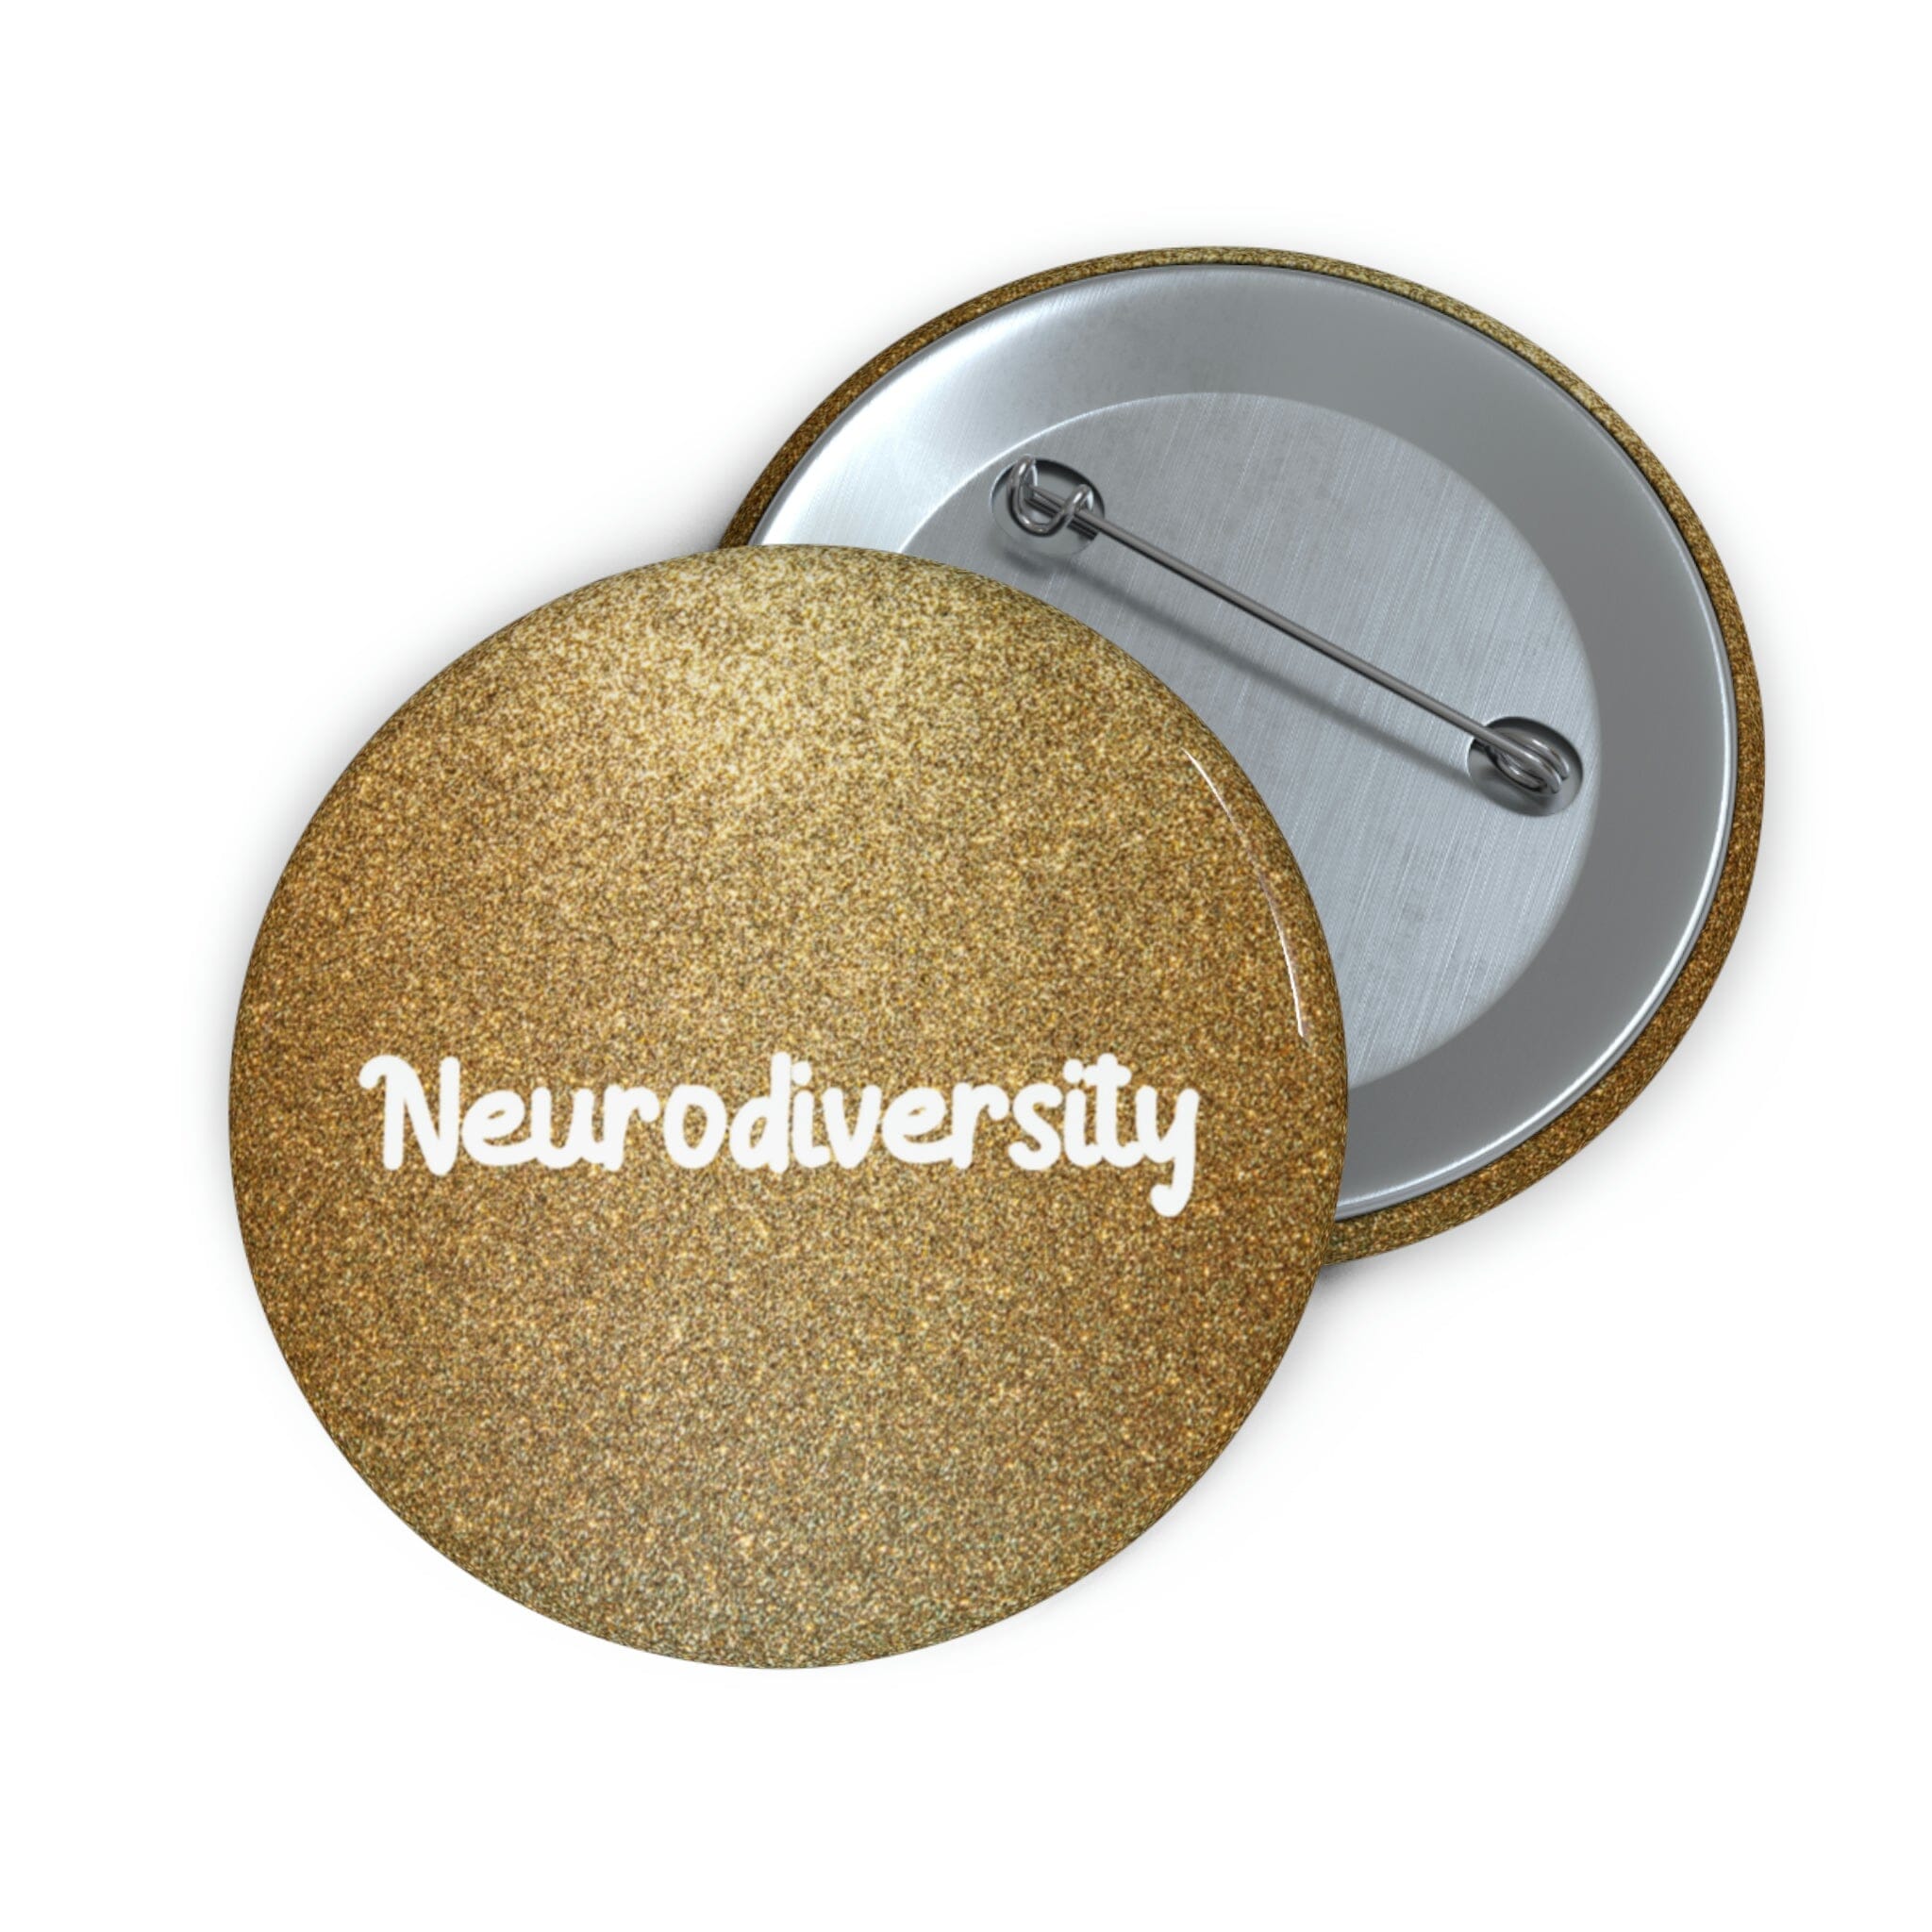 Neurodiversity Gold Glitter Pin Accessories The Autistic Innovator 